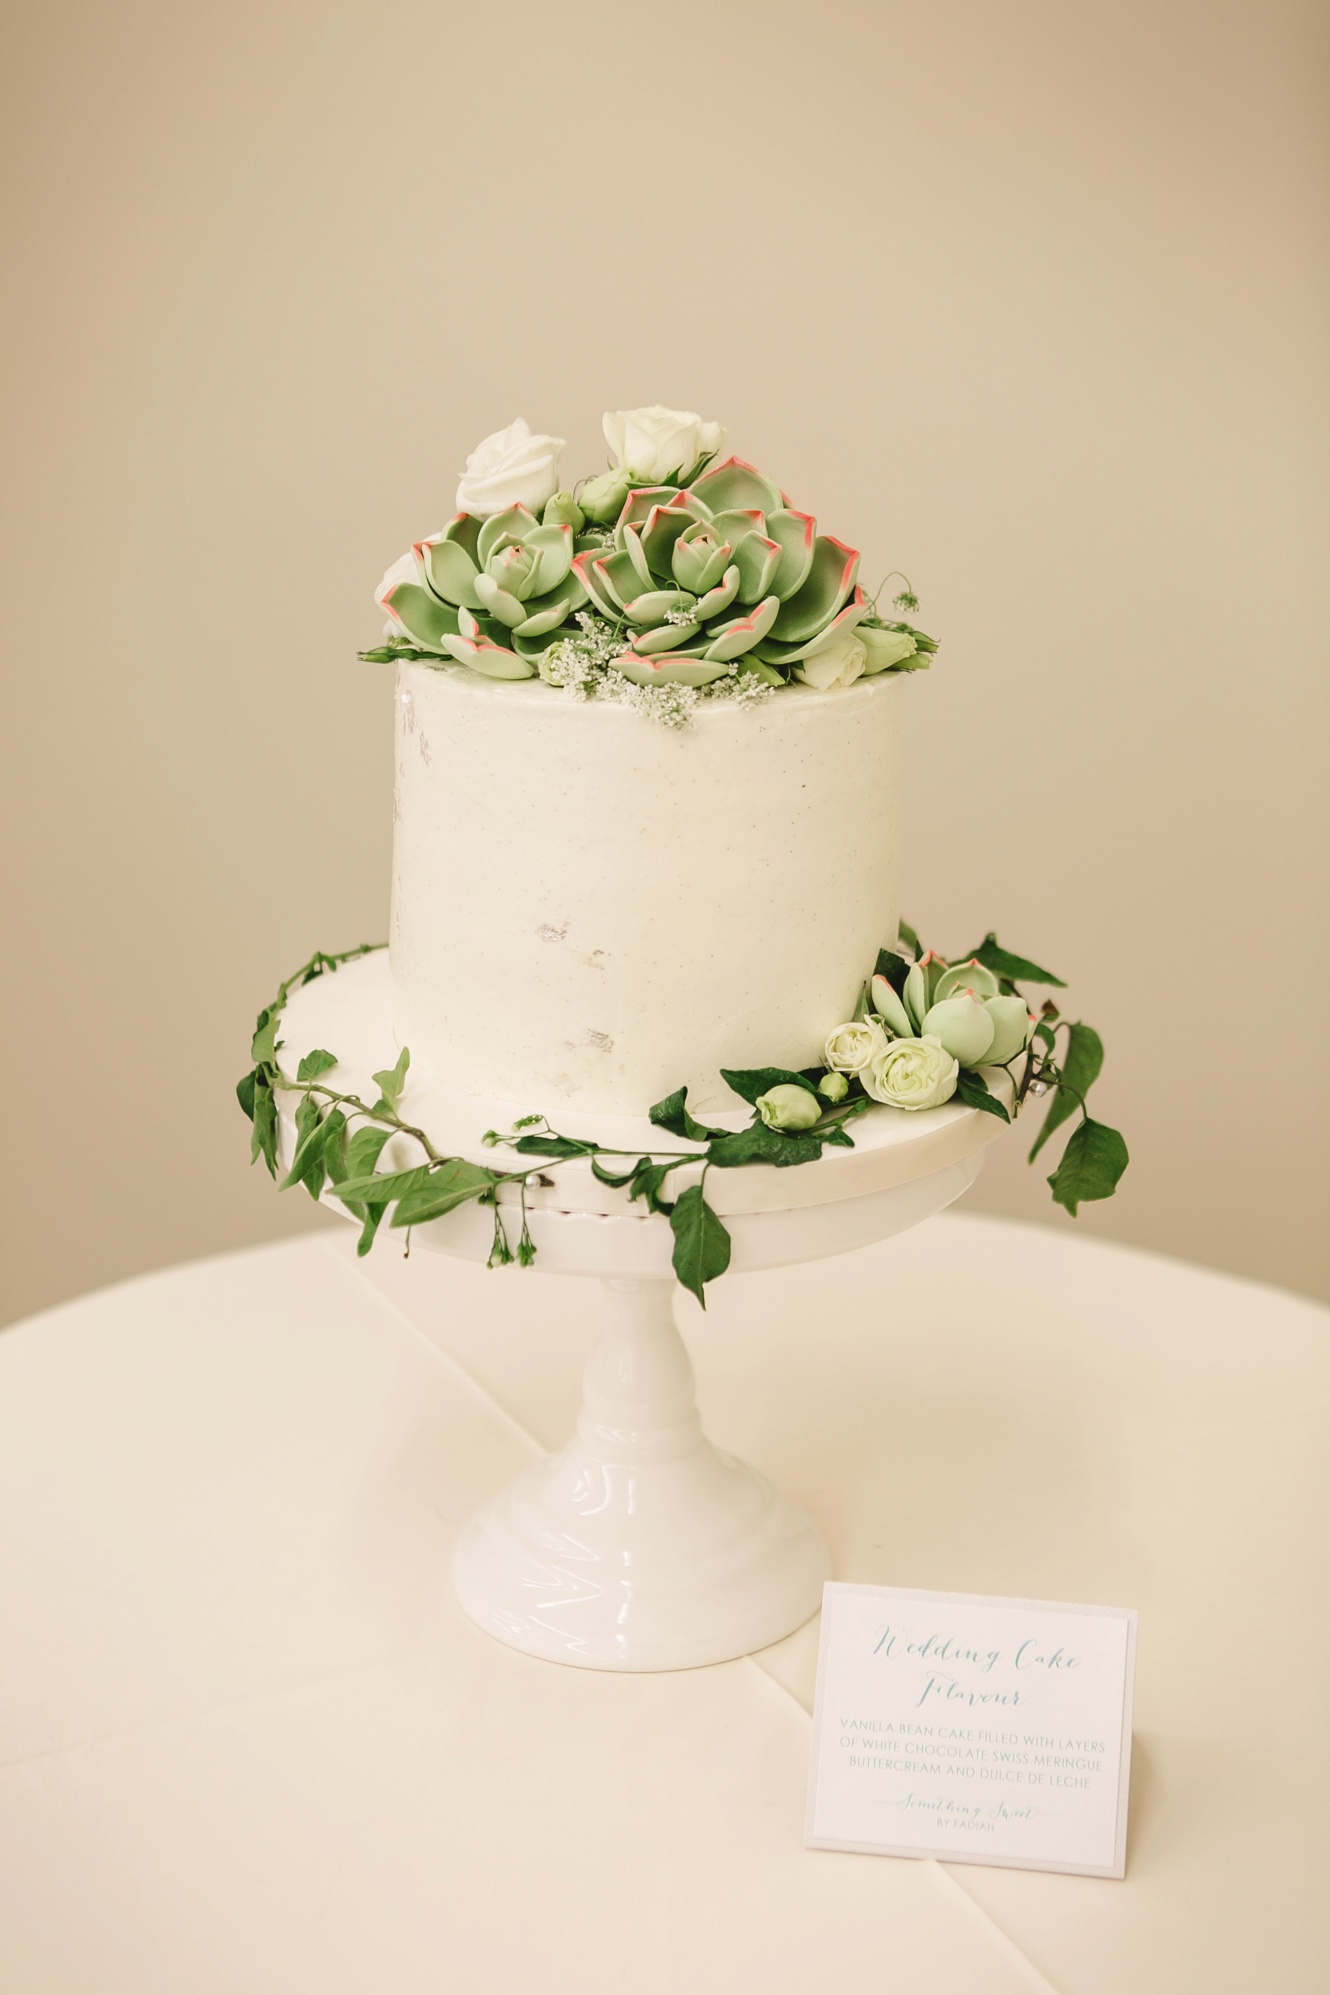 Succulent wedding cake photo